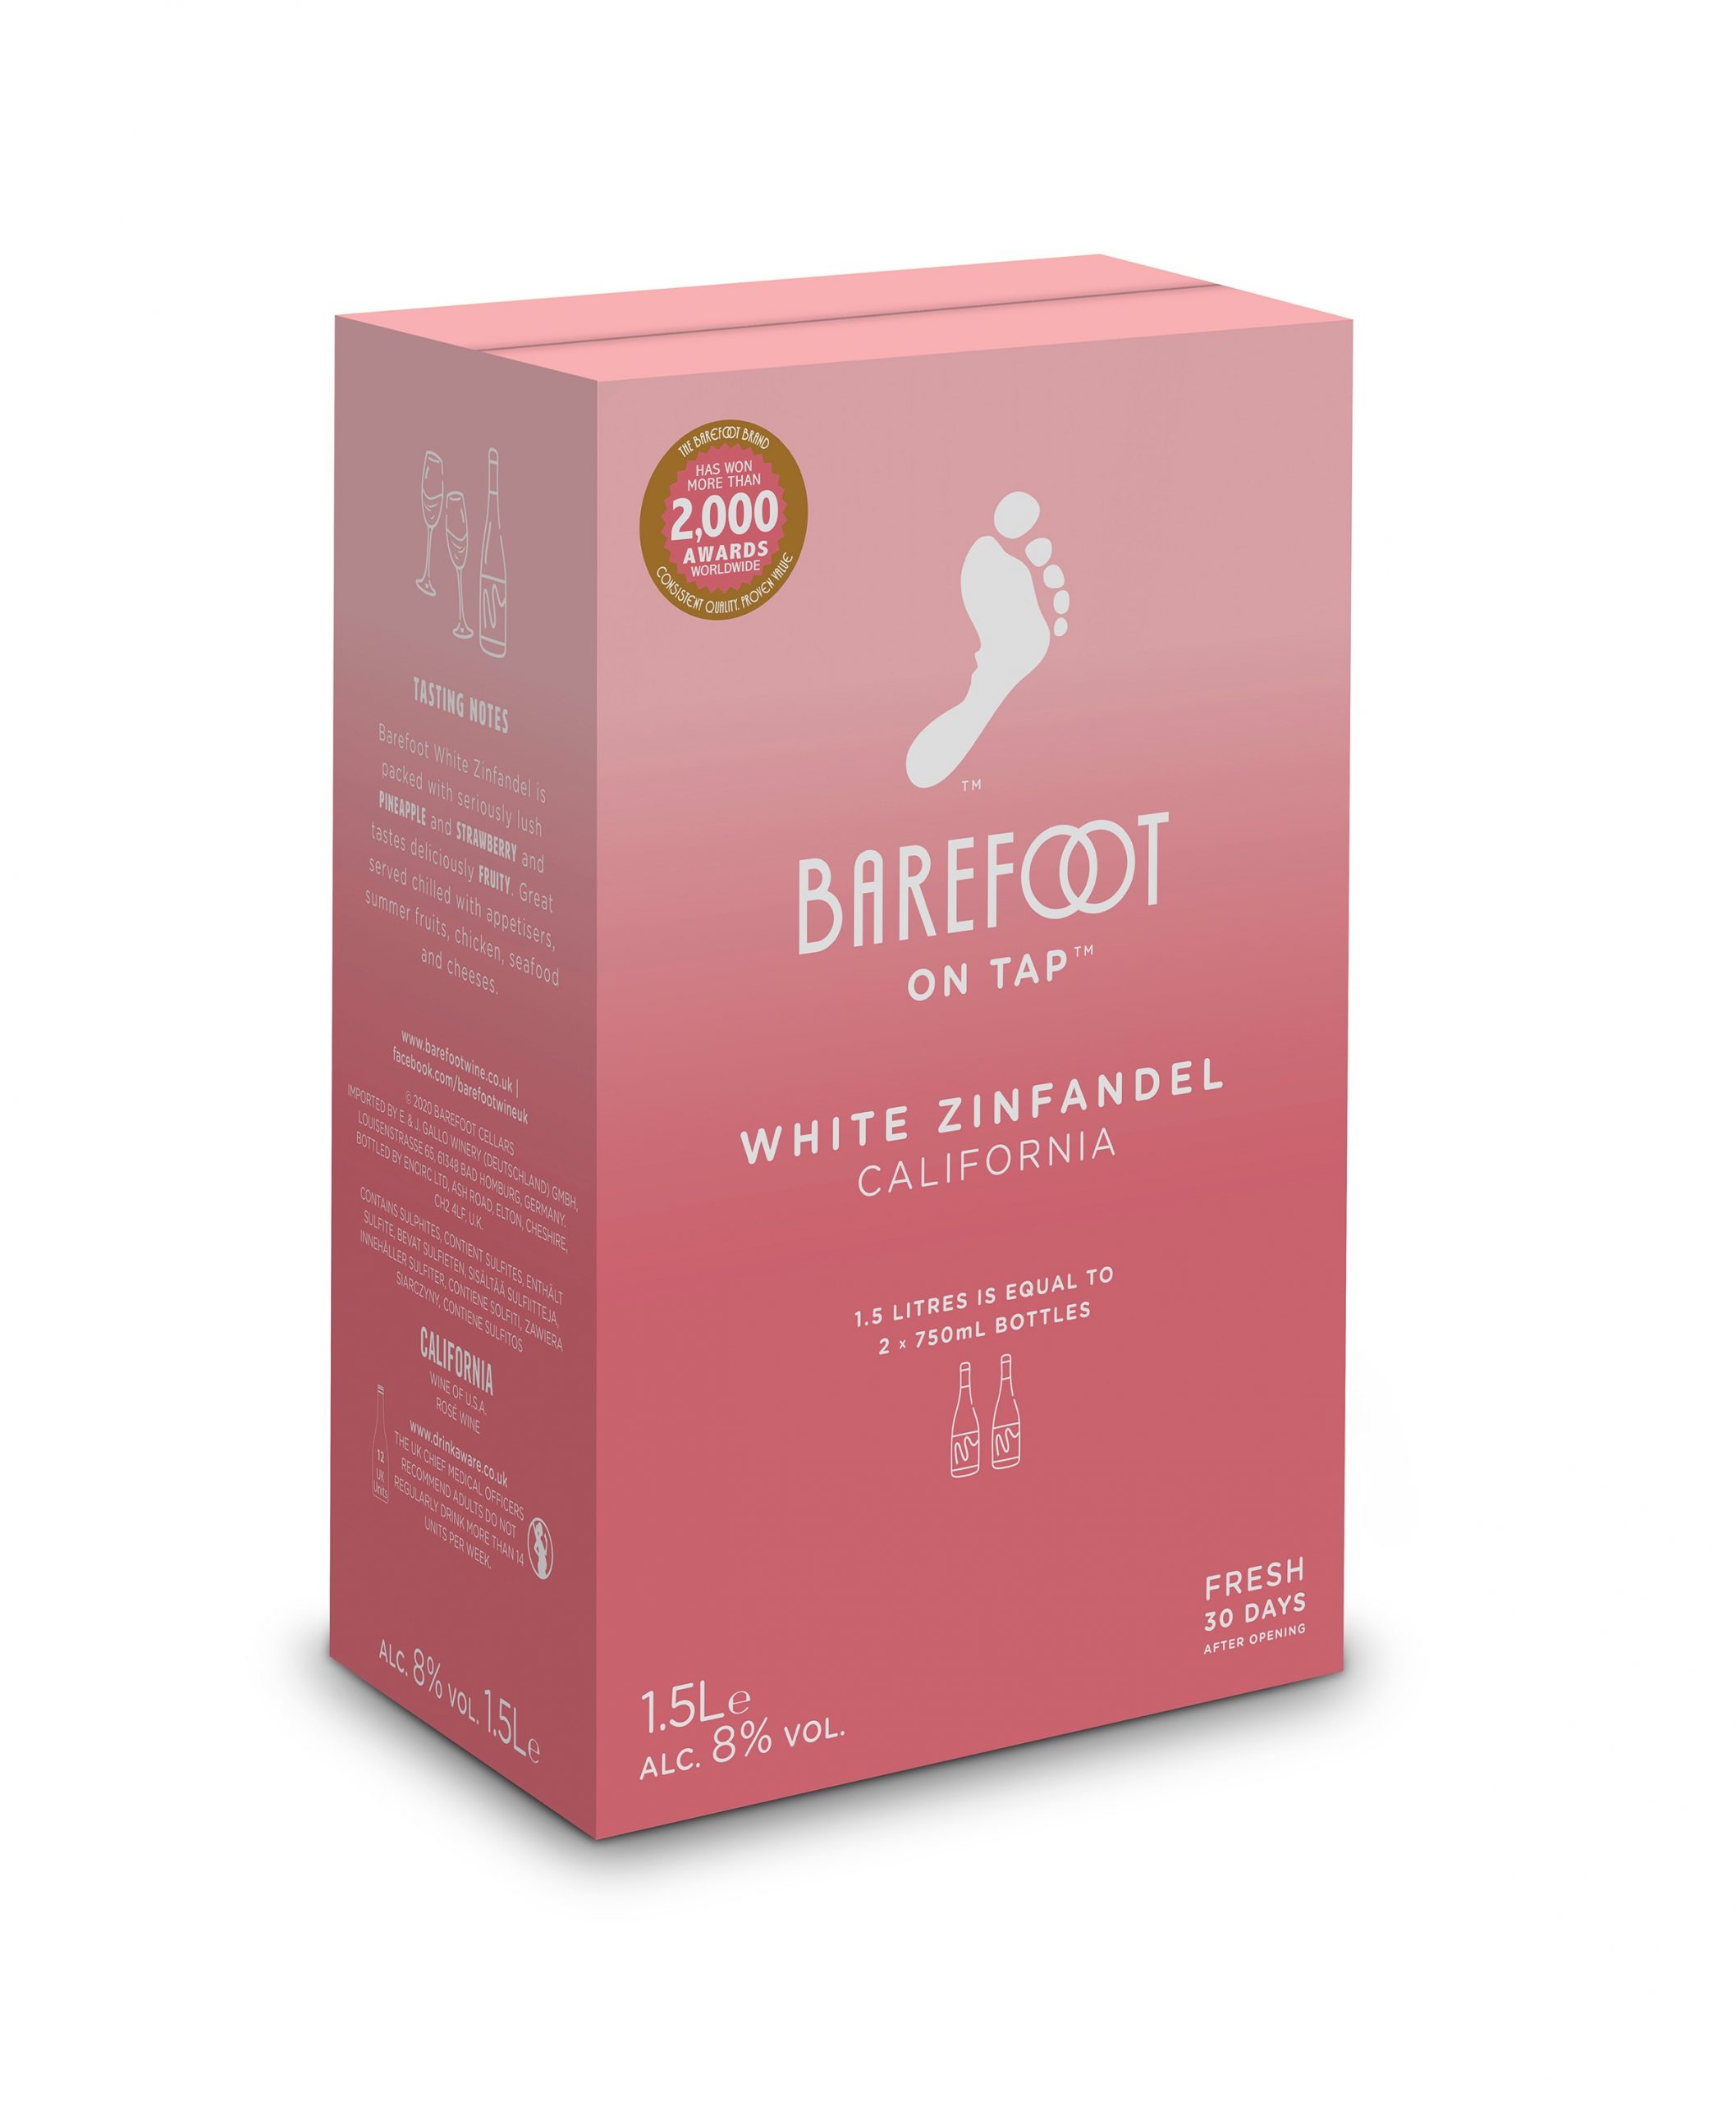 Barefoot launches Bag-In-Box wine range